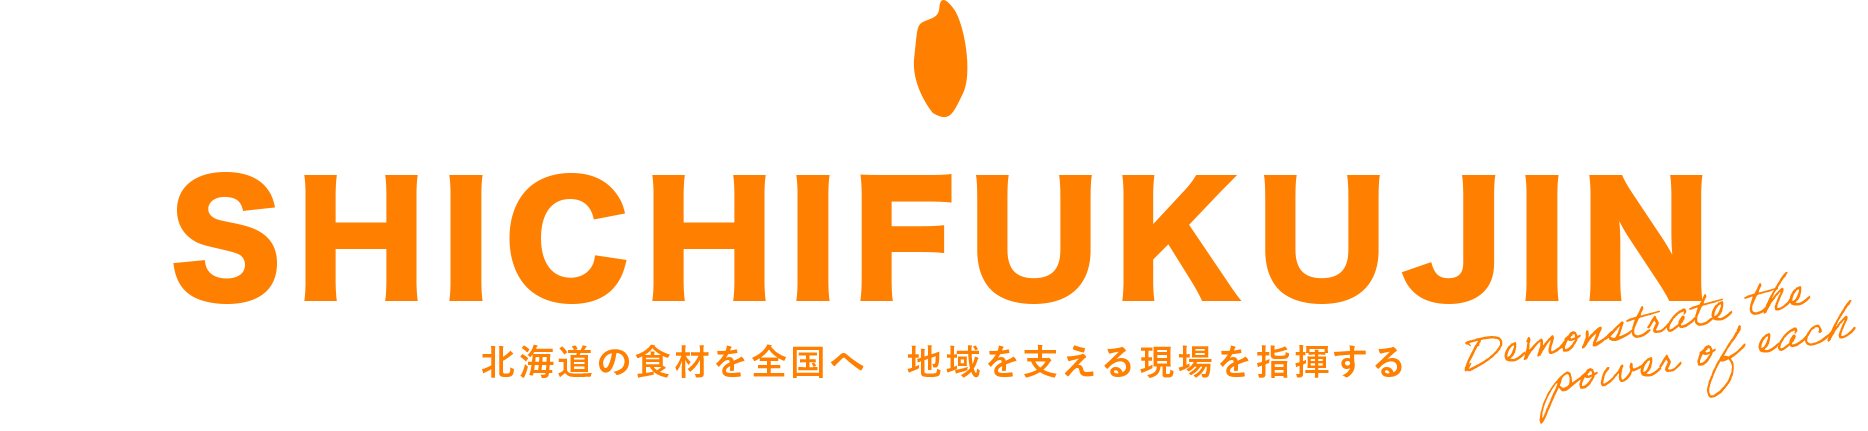 SHICHIFUKUJIN 北海道の食材を全国へ 地域を支える現場を指揮する